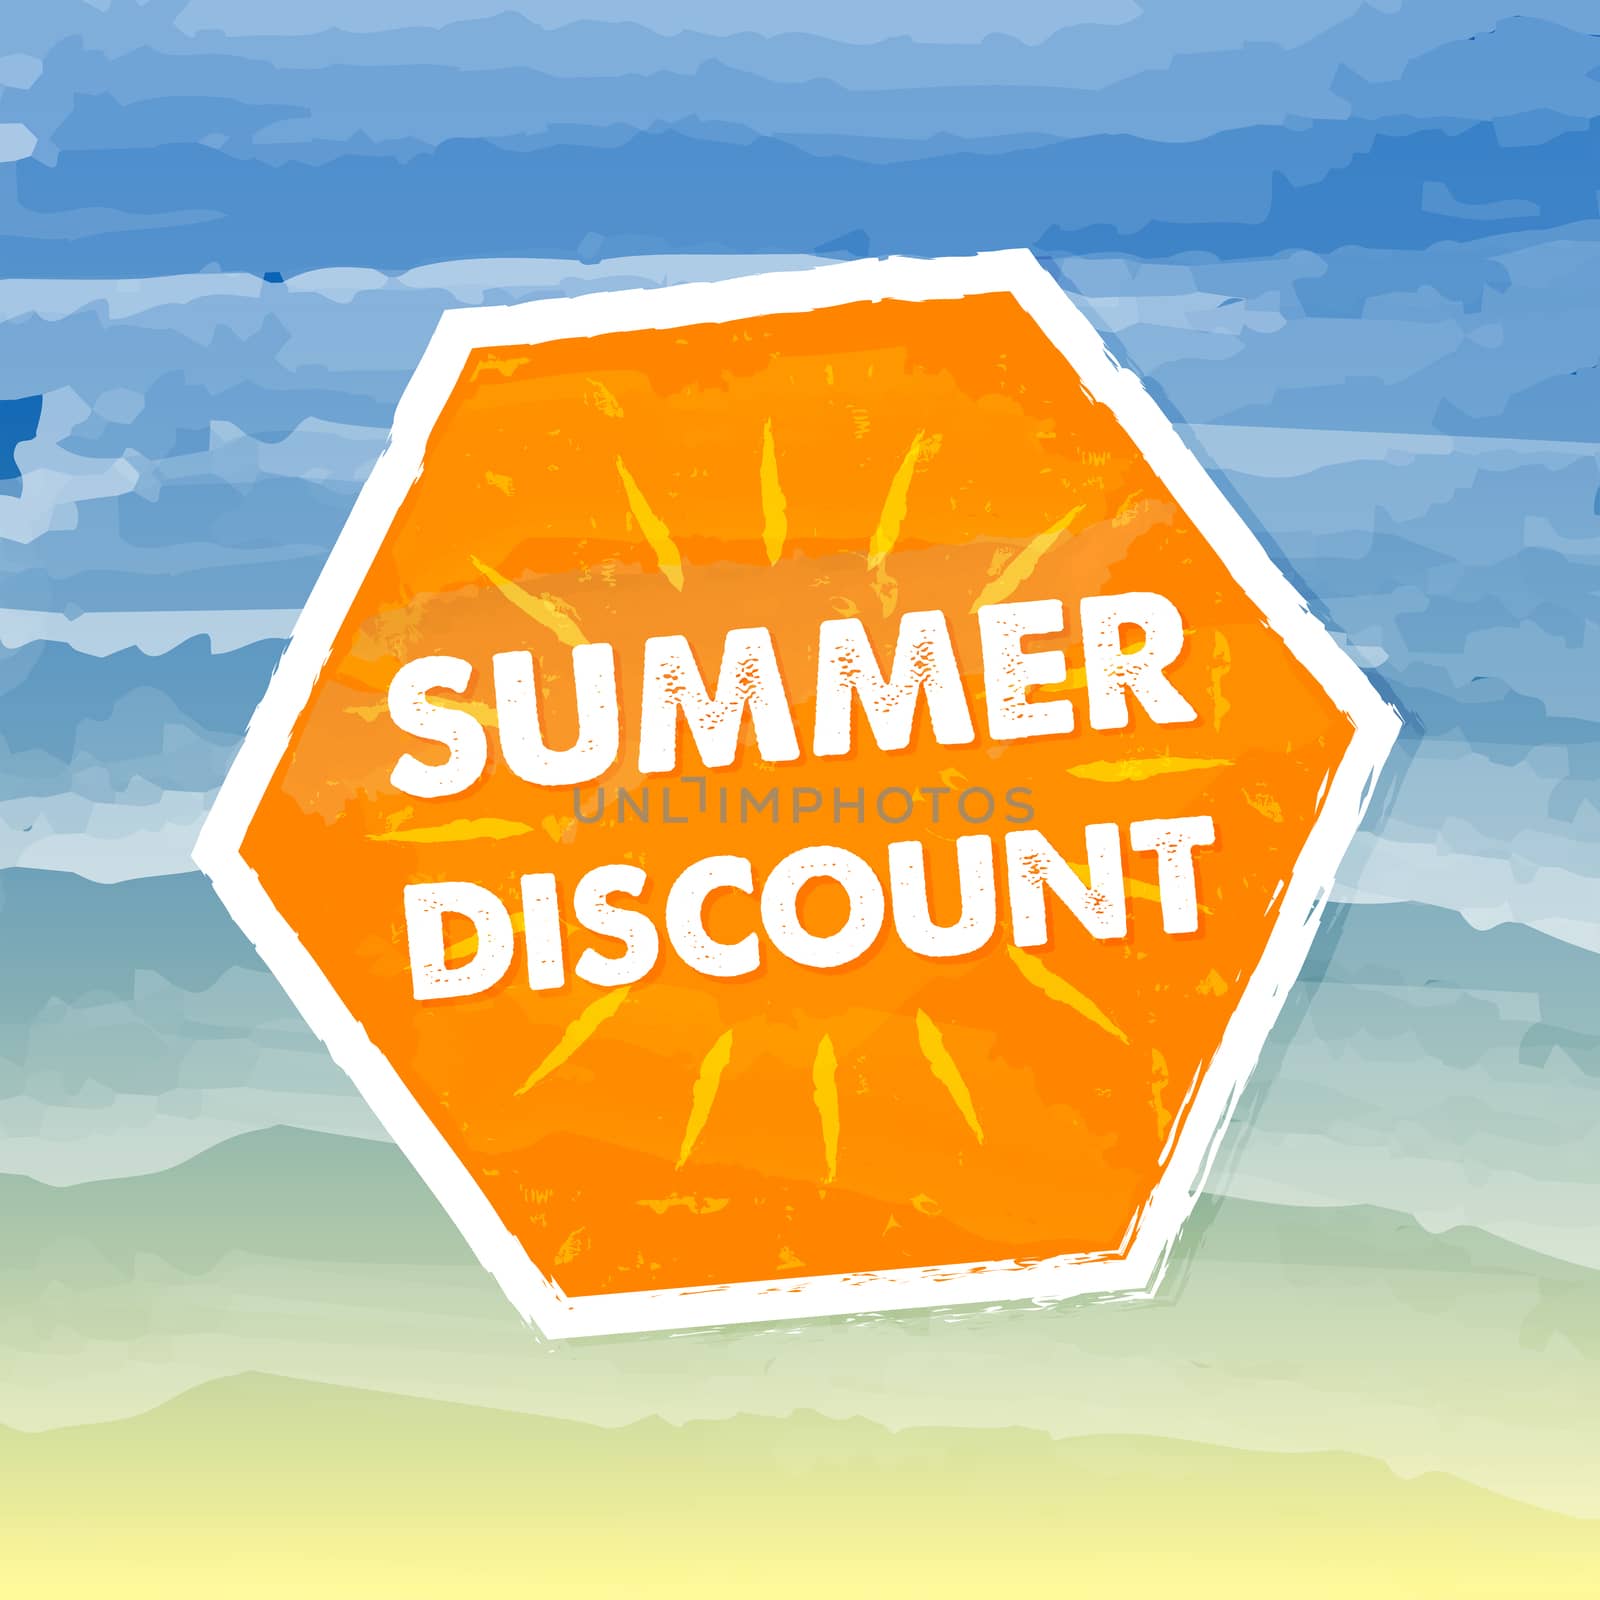 summer discount in orange label over sea background by marinini